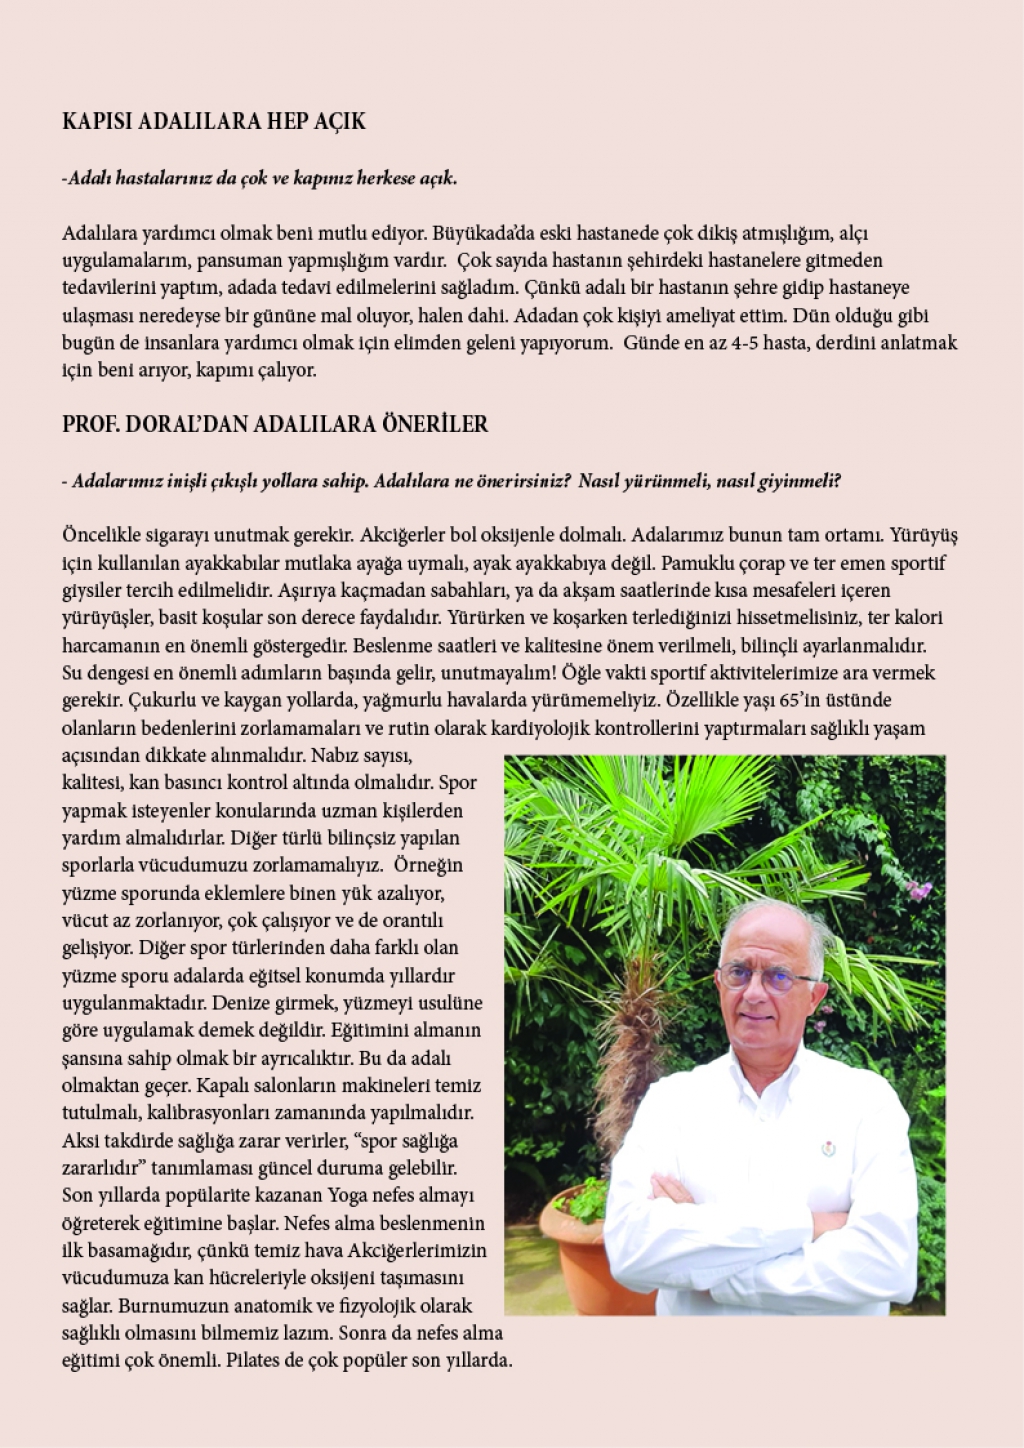 Adalı bilim insanı Prof. Dr. Mahmut Nedim Doral